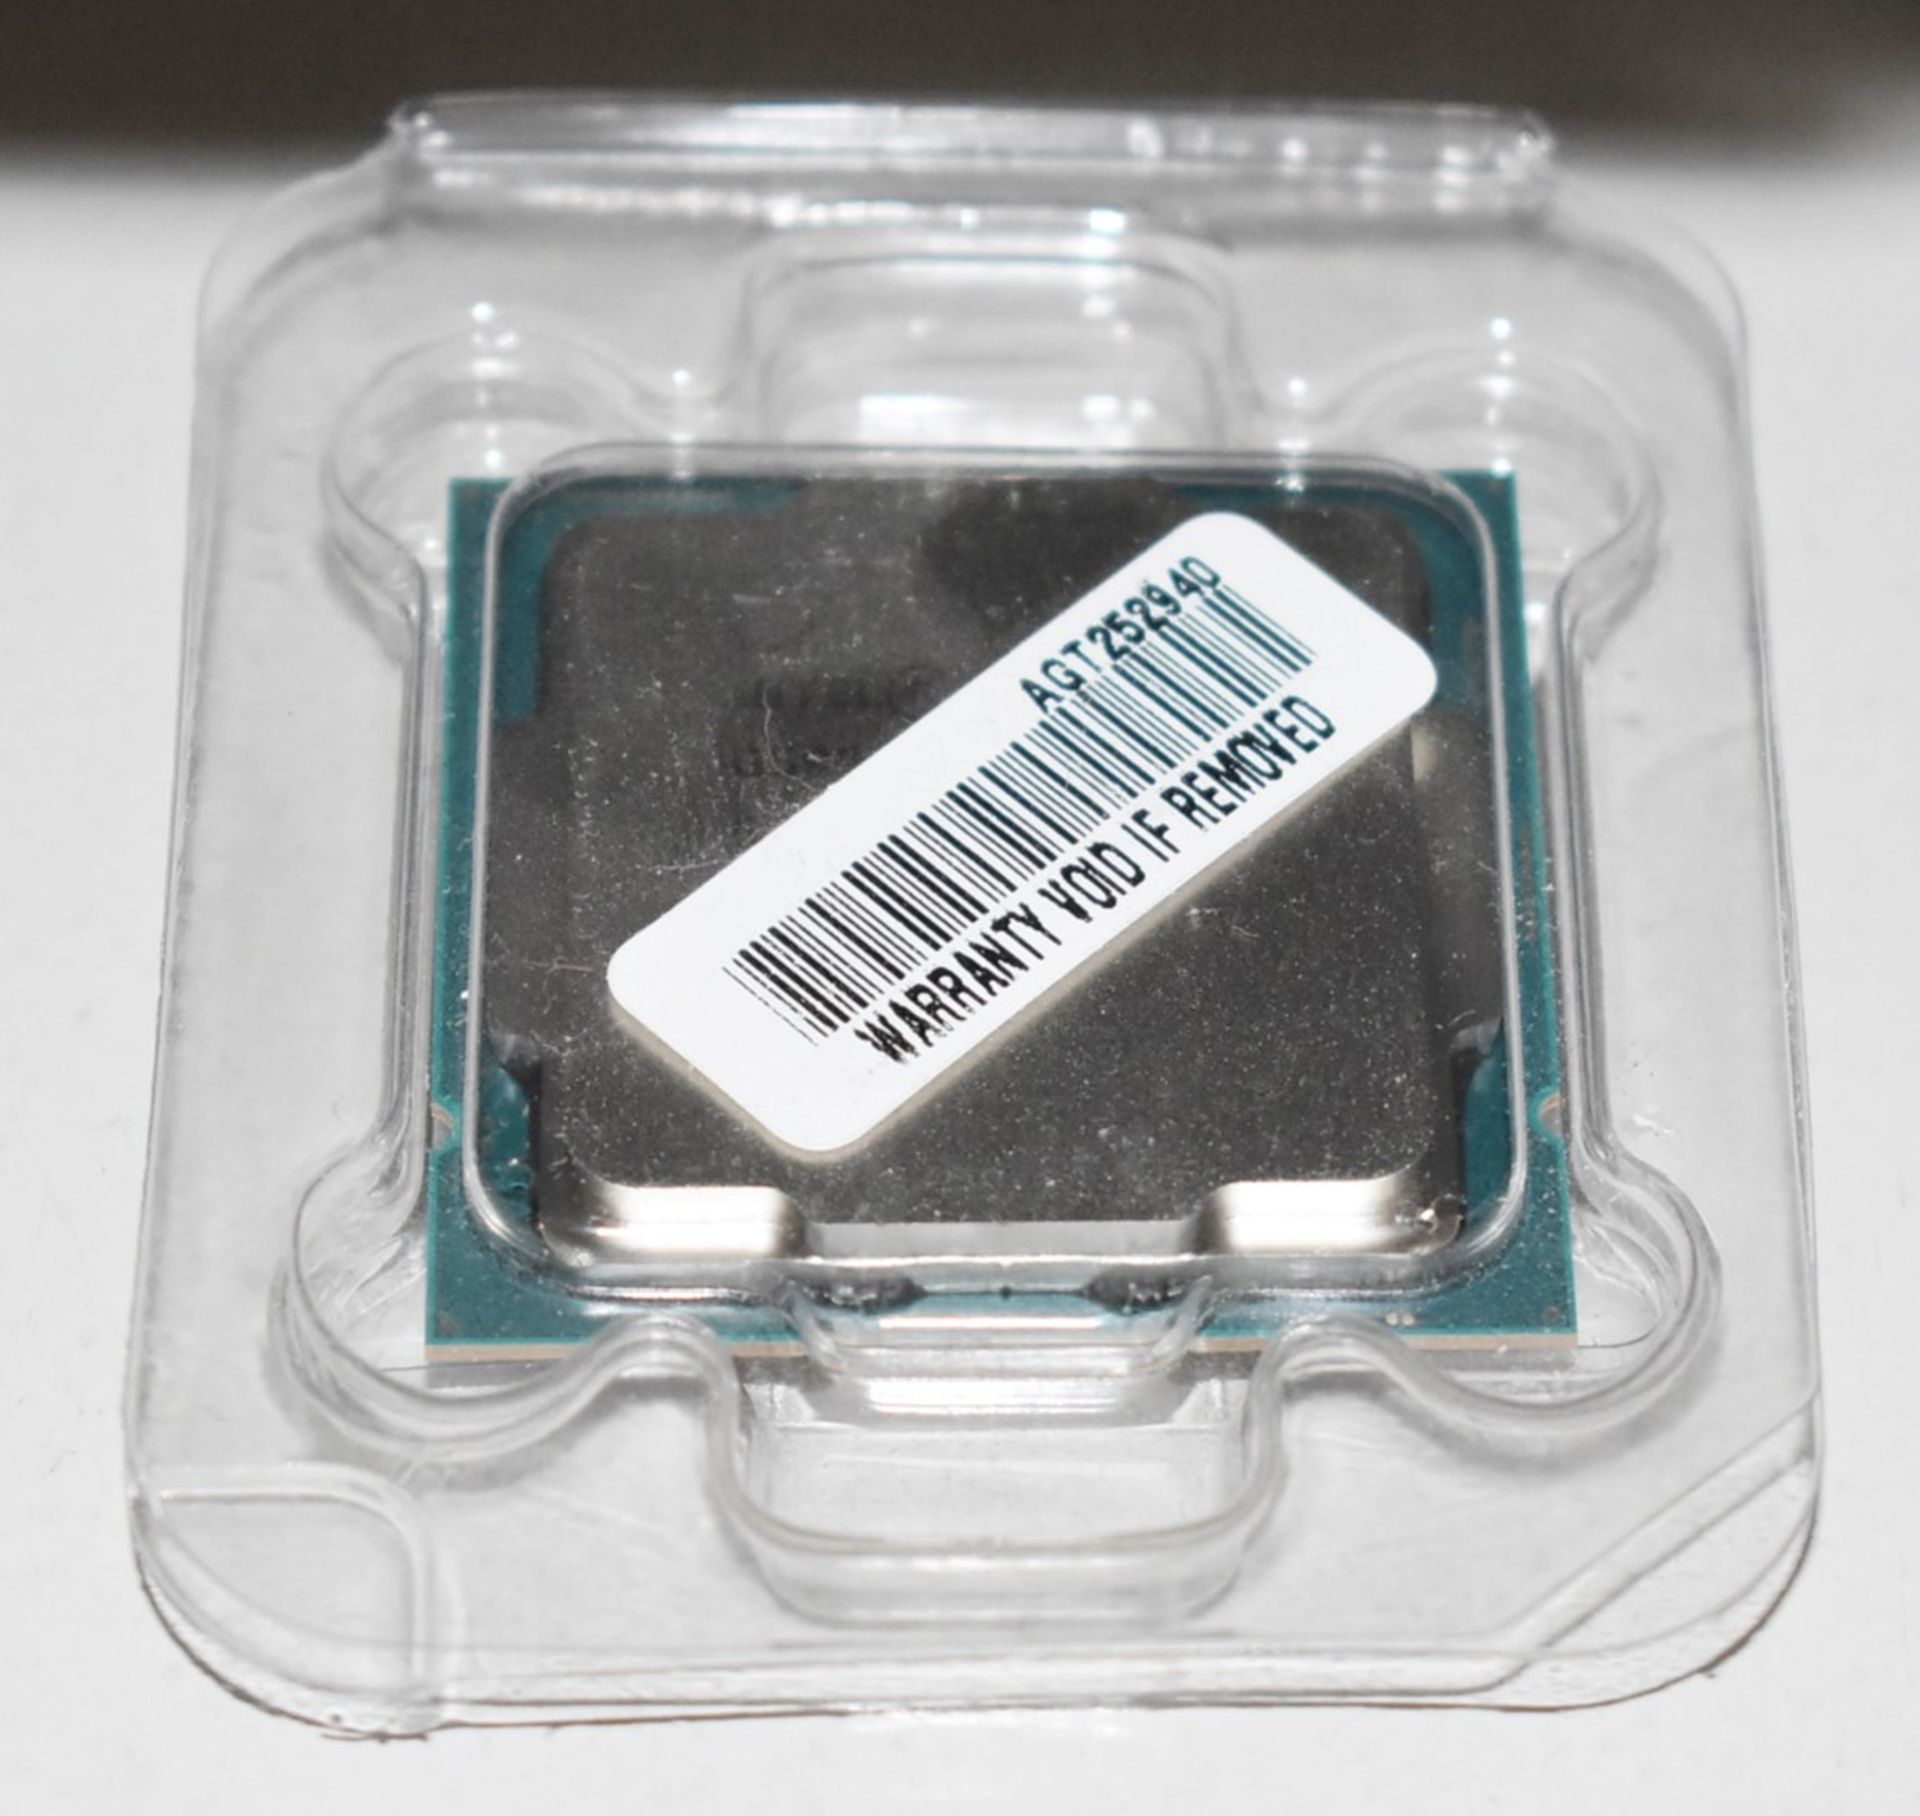 1 x Intel Celeron G5905 10th Gen 3.5Ghz LGA1200 Dual Core Processor - New and Unused - Image 3 of 4